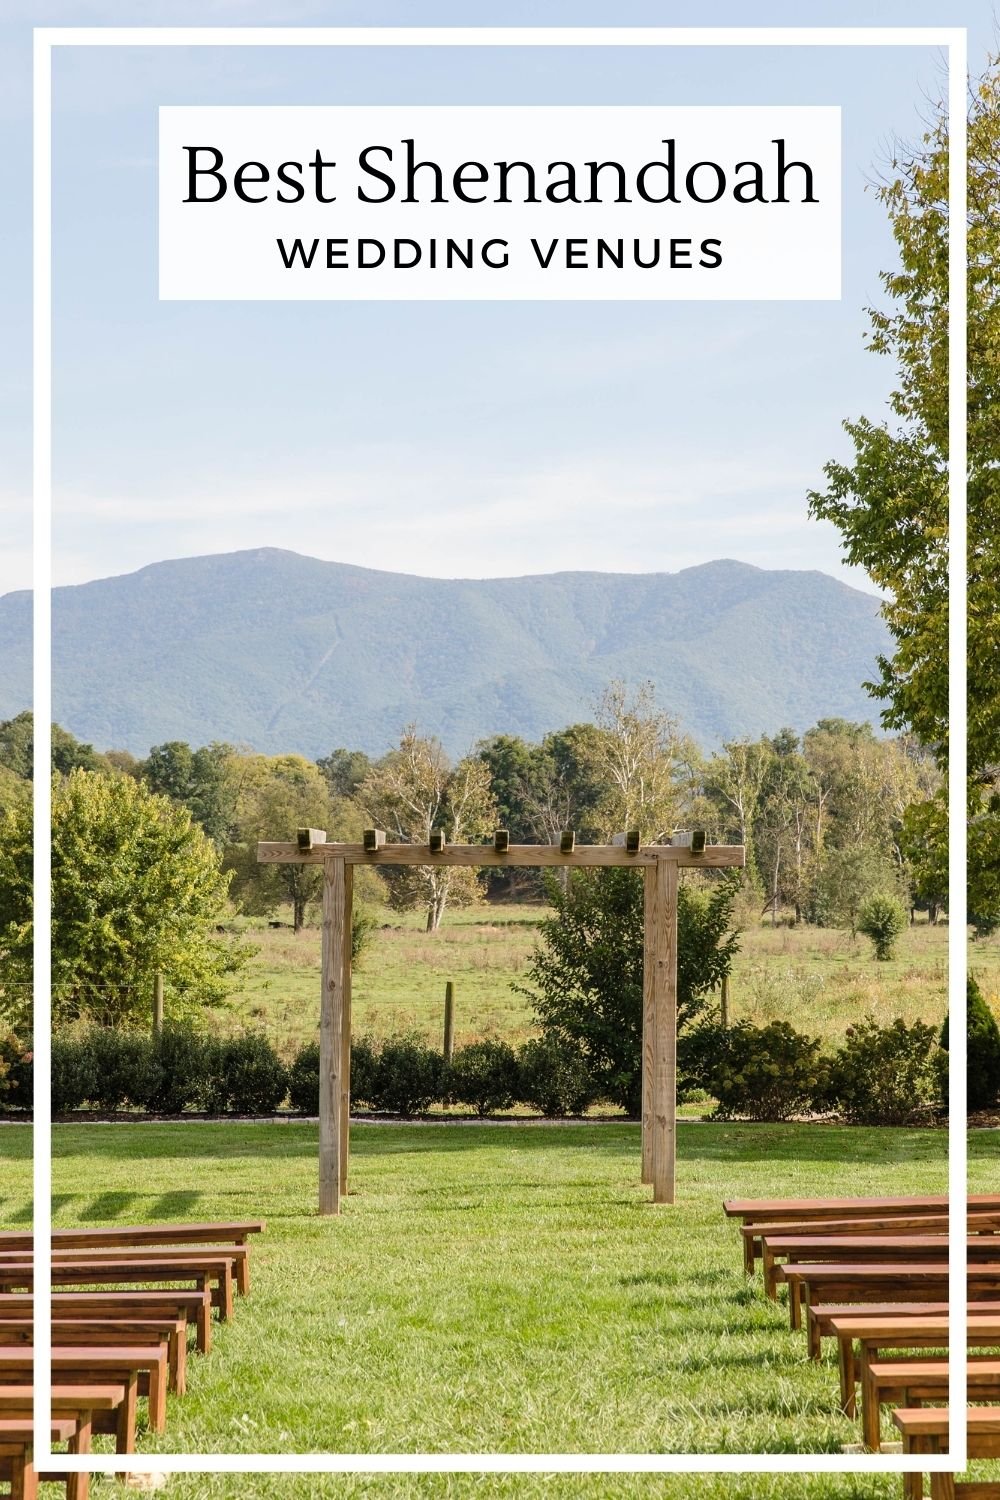 Best wedding venues in Shenandoah, VA